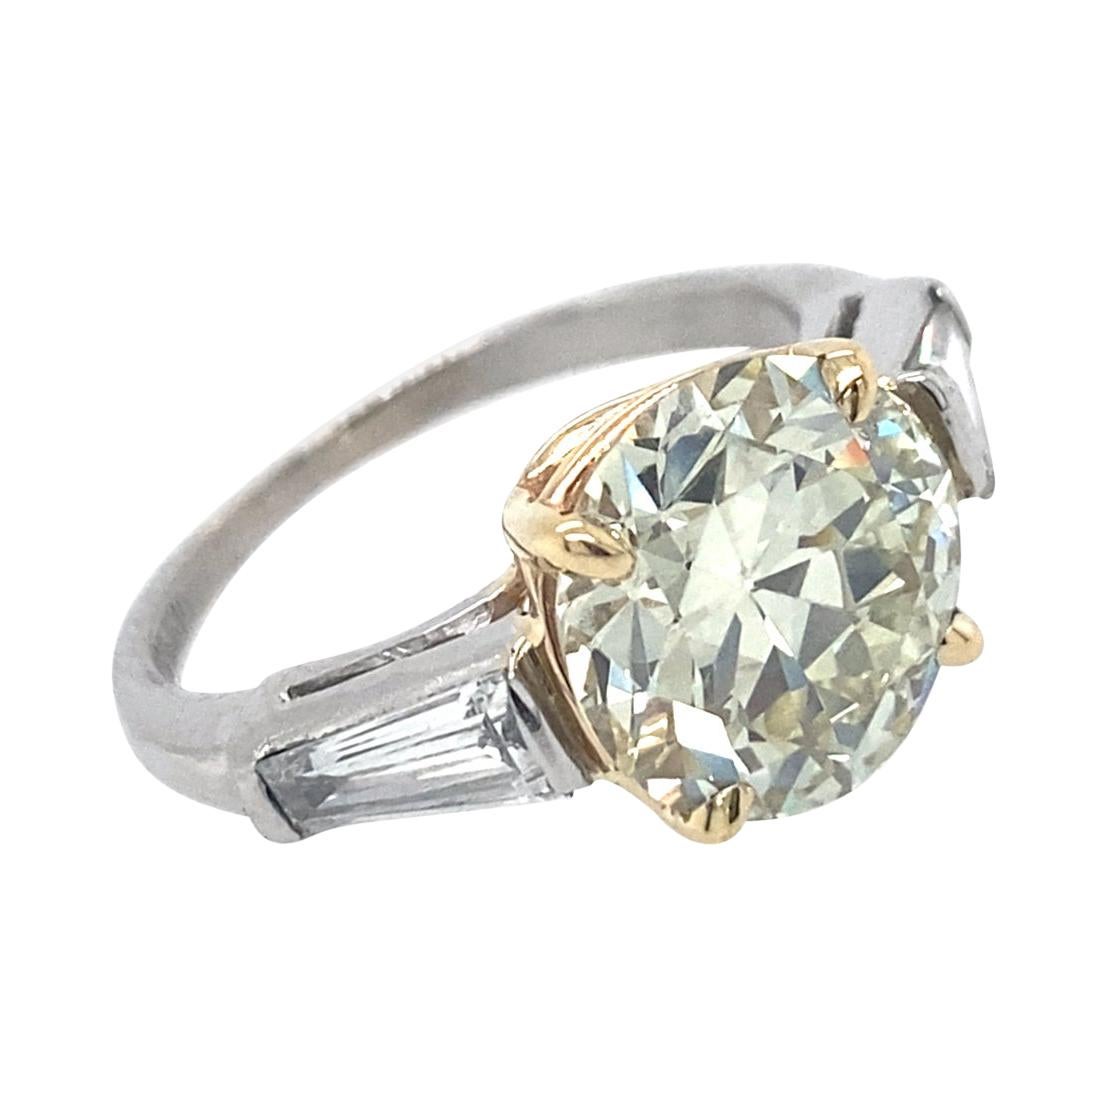 Certified 3.16 Carat Transitional Cut Diamond in Platinum & Gold 3-Stone Ring